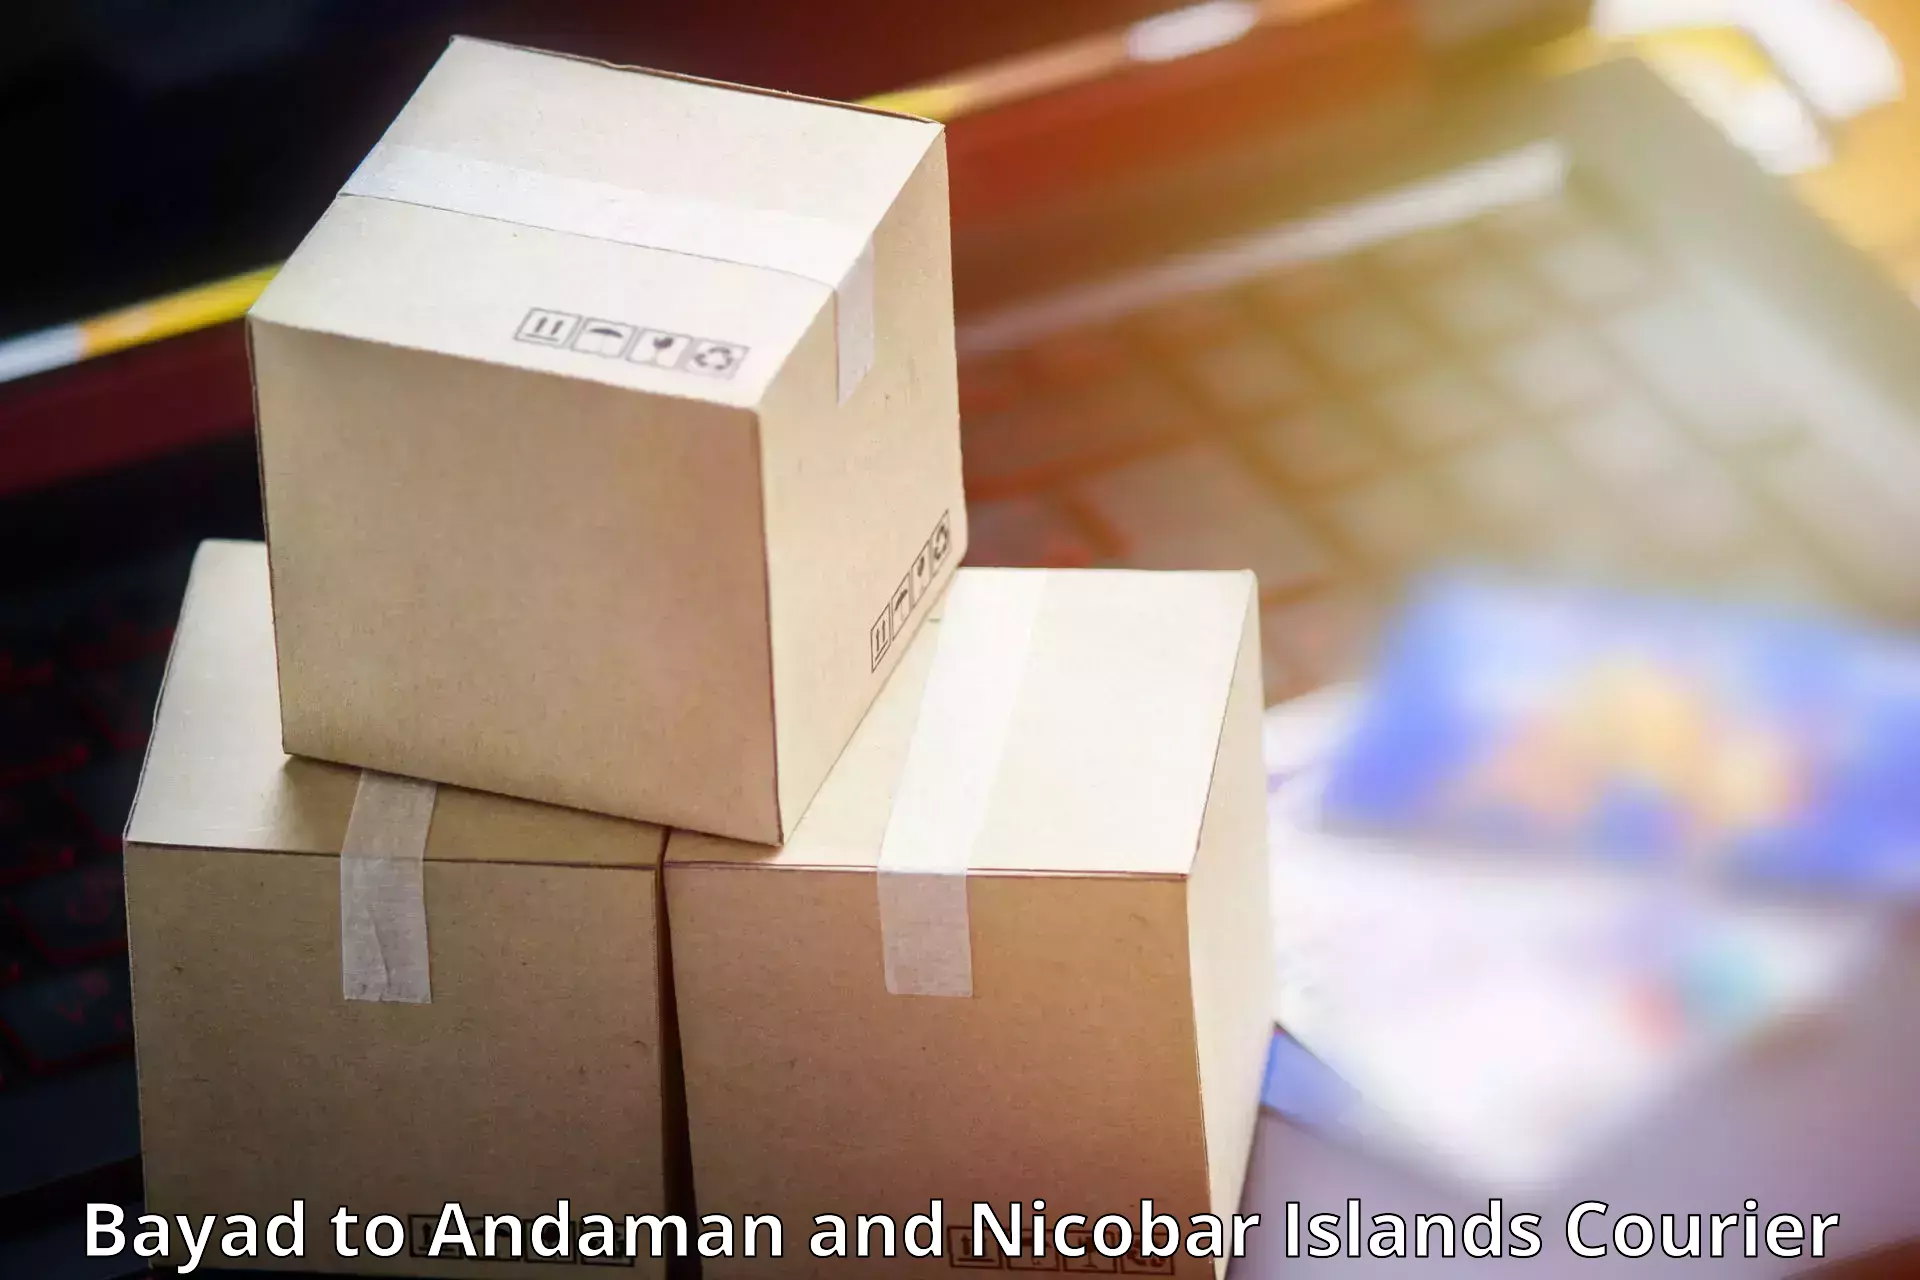 International parcel service Bayad to Andaman and Nicobar Islands